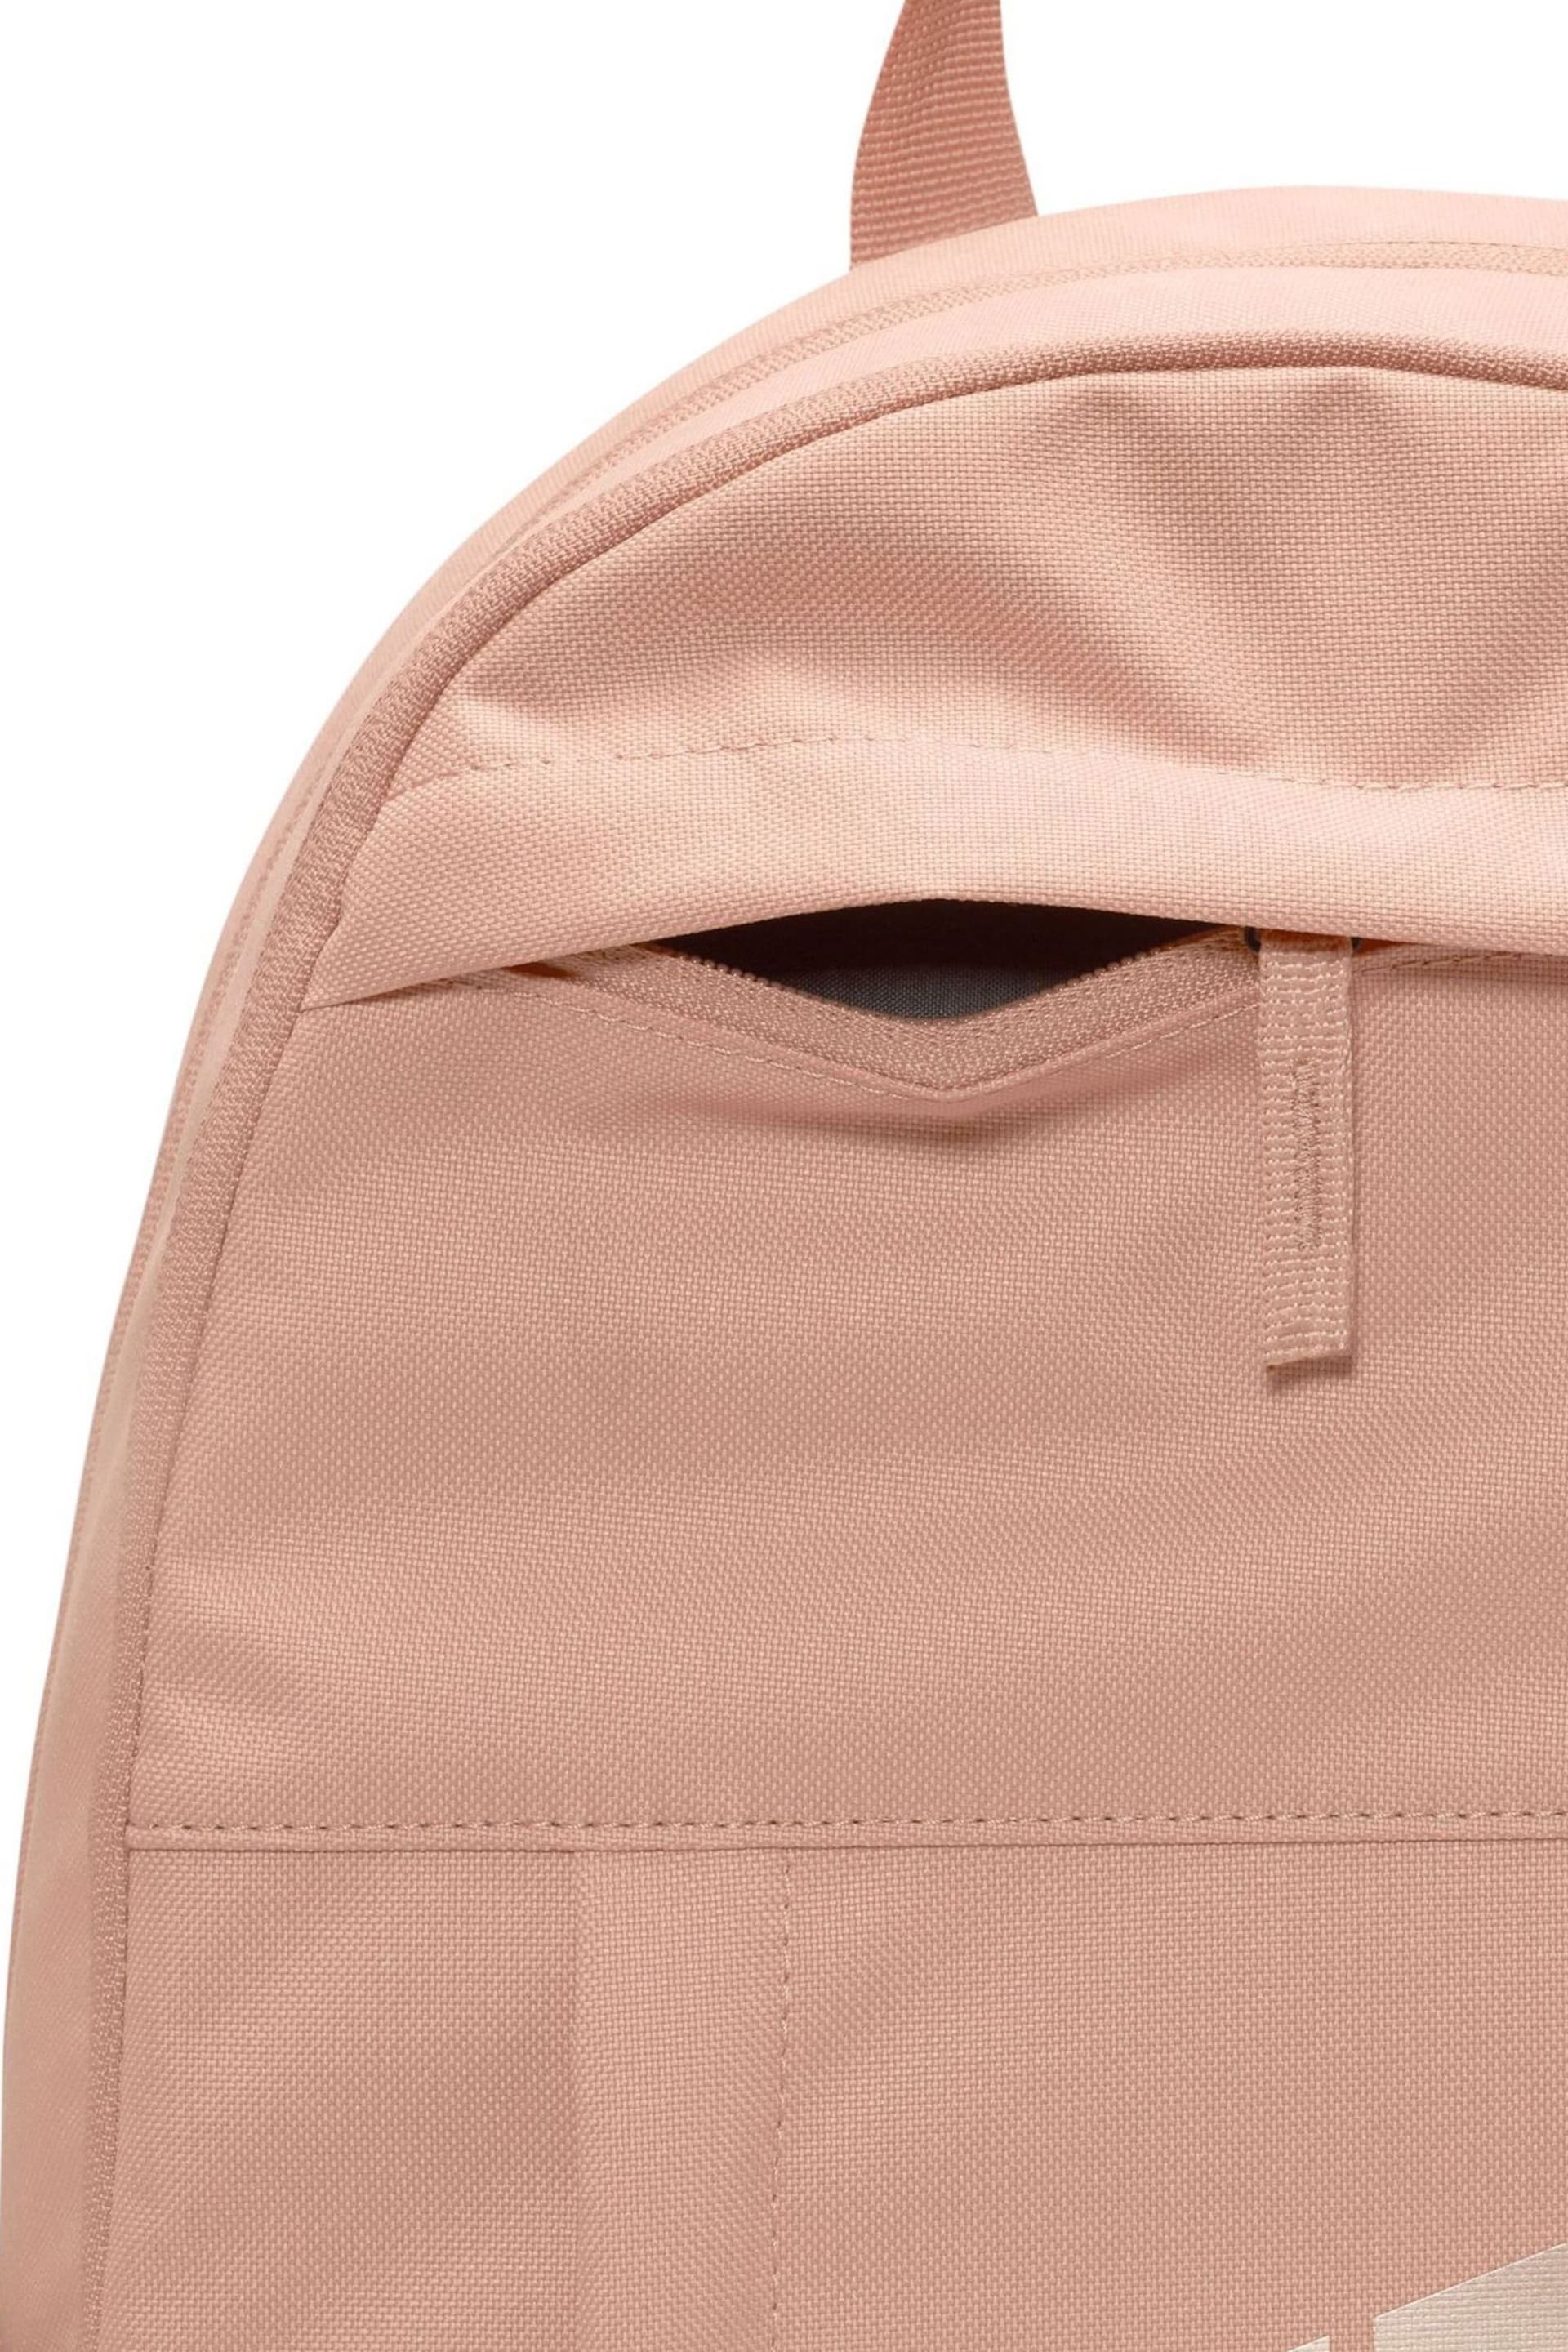 Nike Pink Elemental Backpack - Image 8 of 10